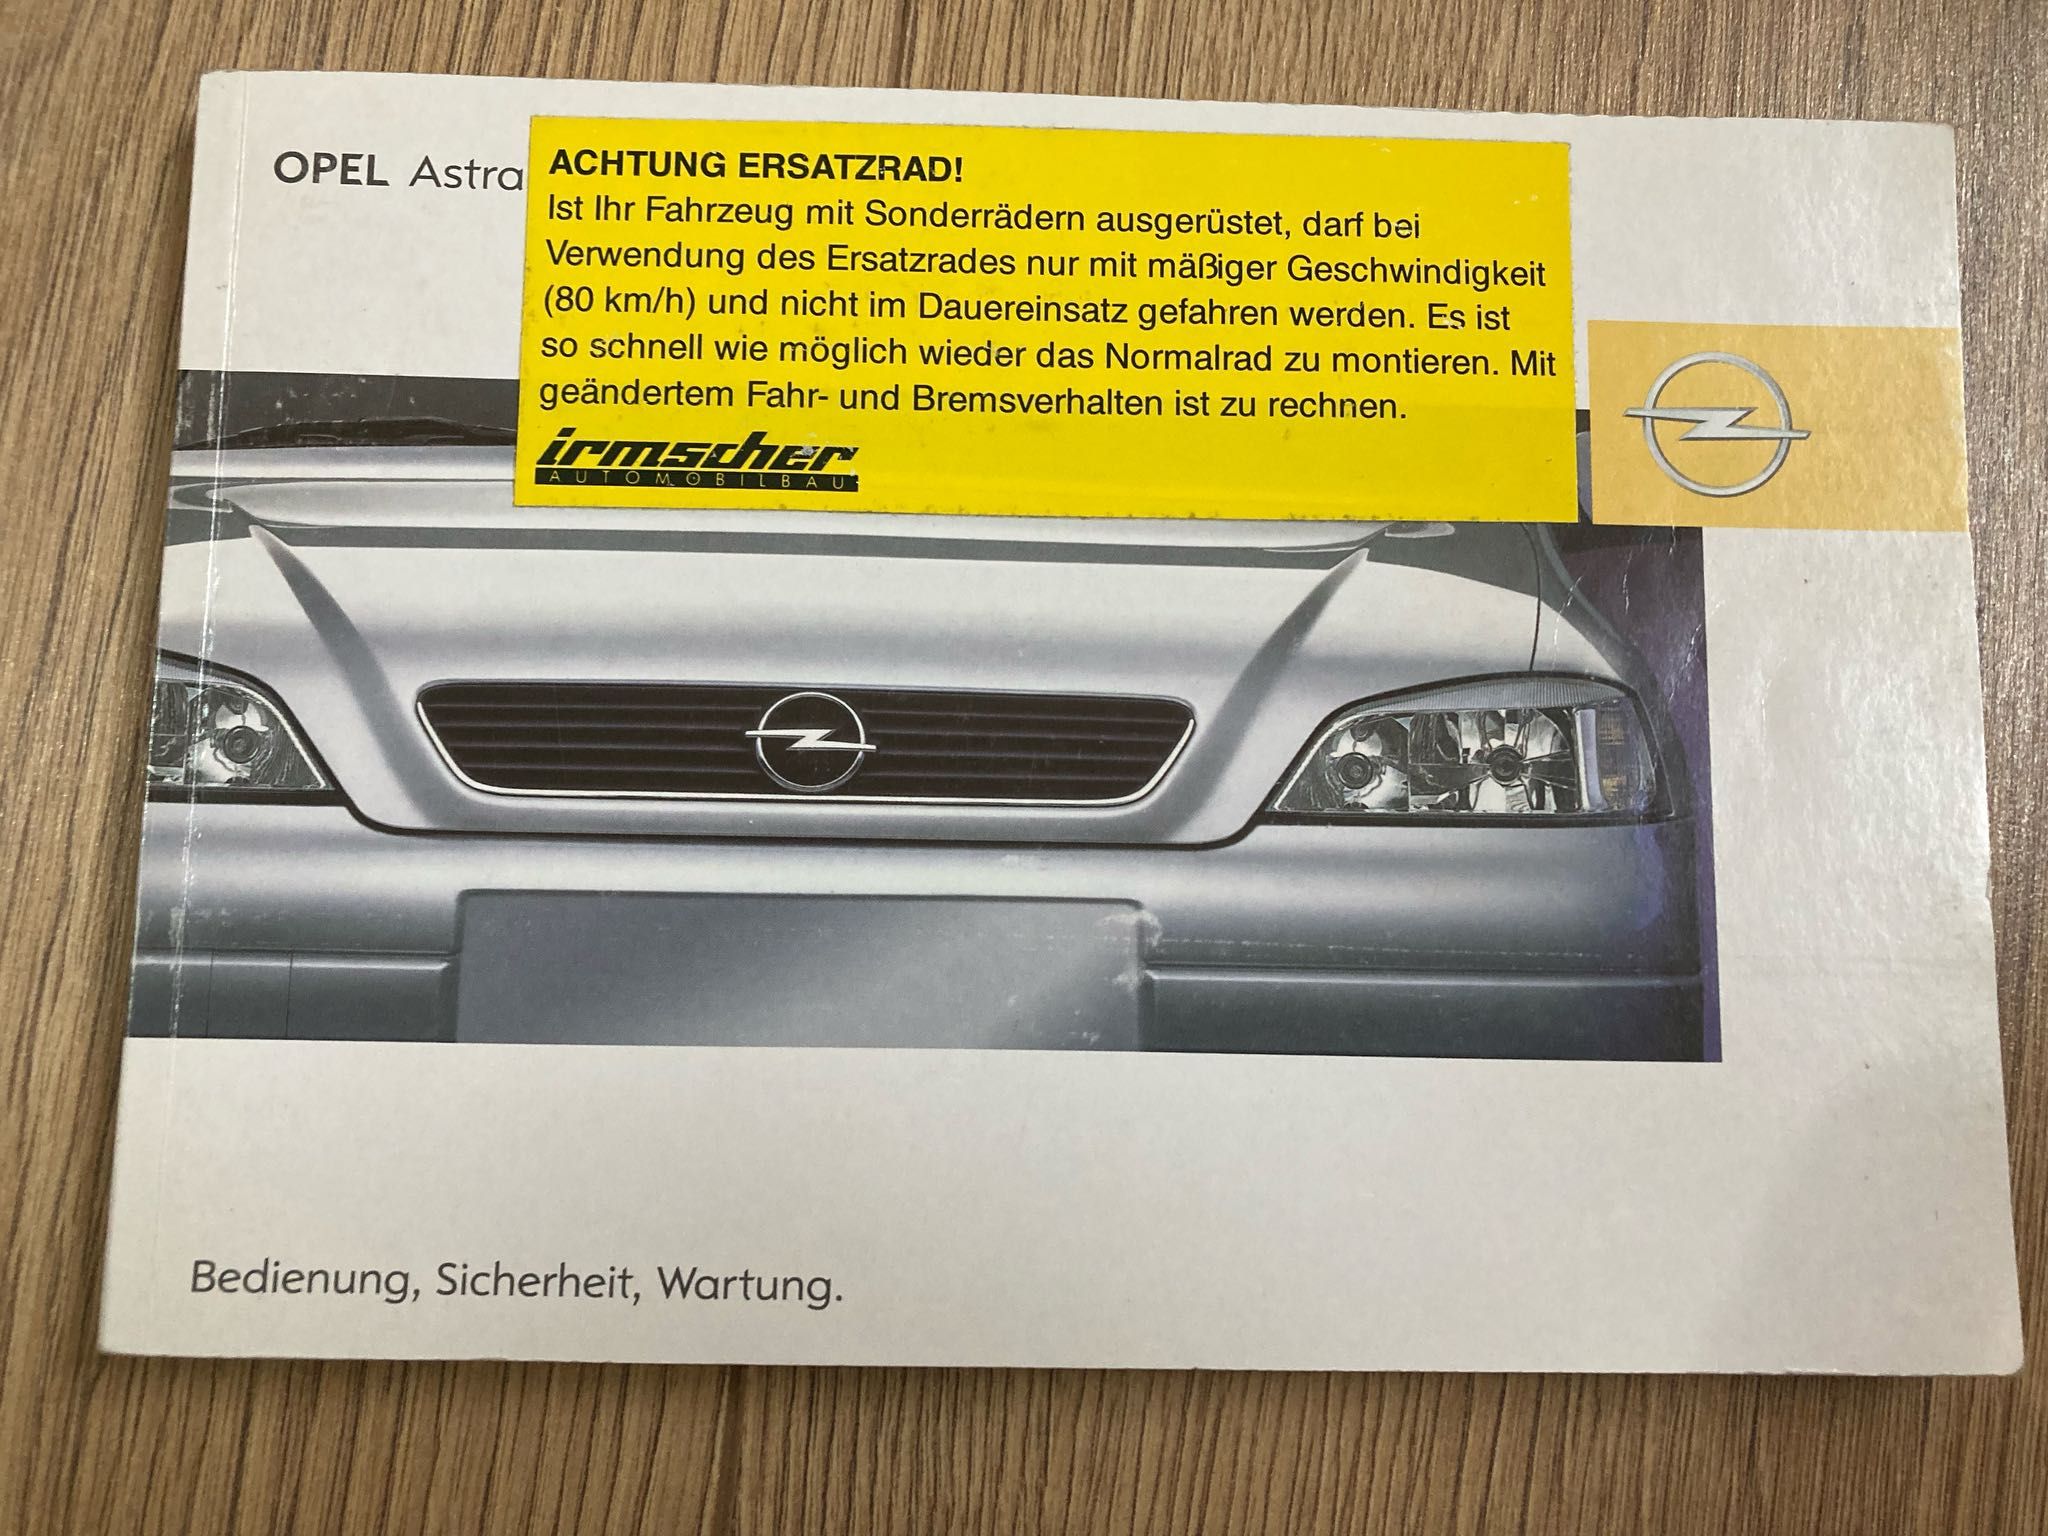 Katalog Opel Astra Line + Instrukcja Obsługi Niemiecka